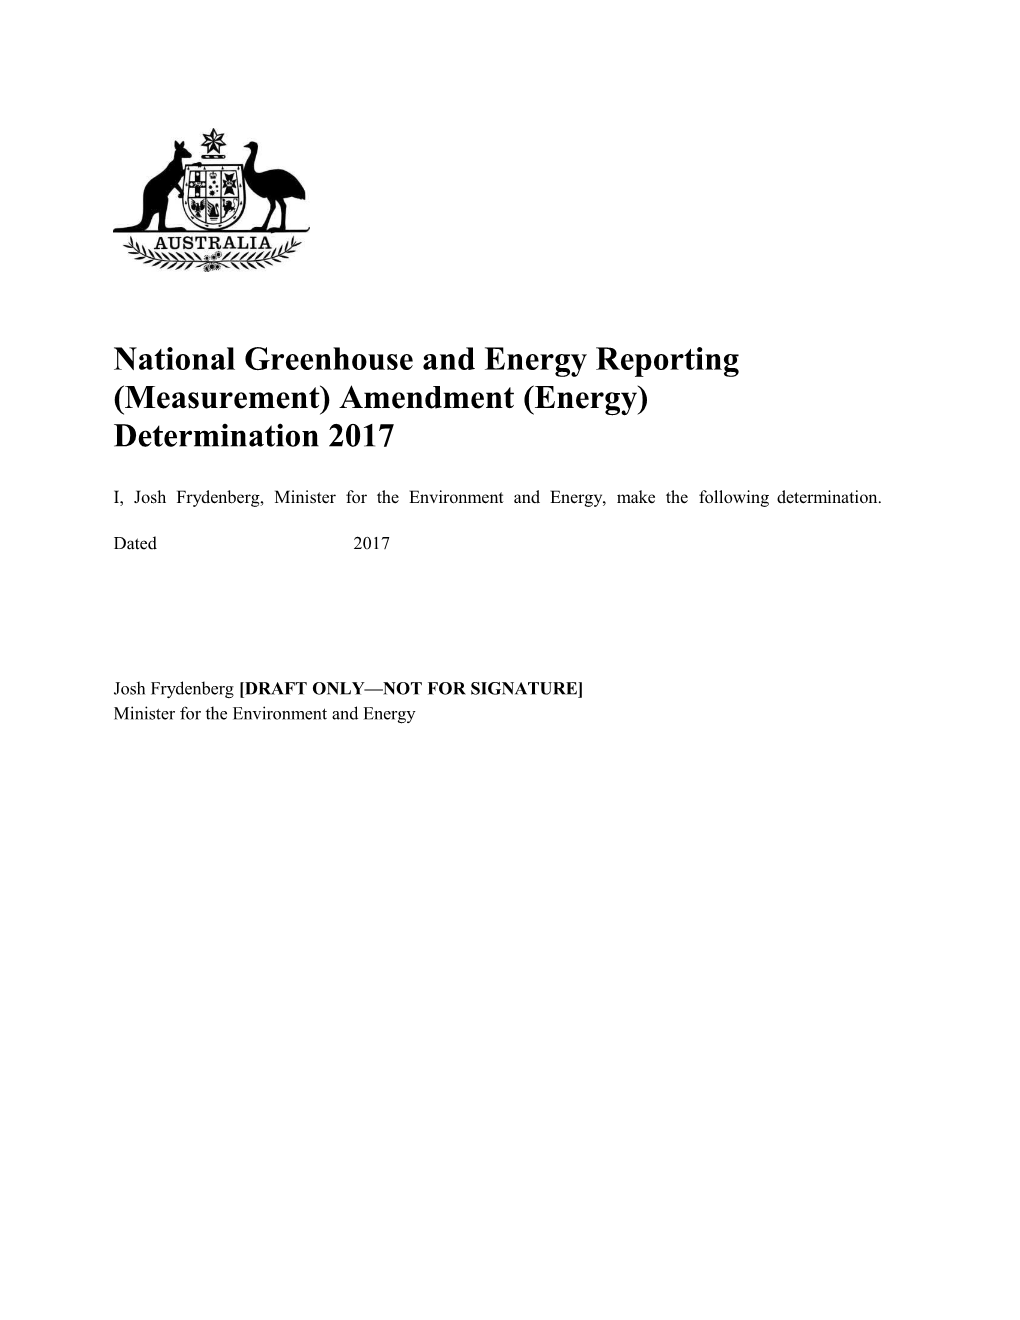 Exposure Draft - National Greenhouse and Energy Reporting (Measurement) Amendment (Energy)